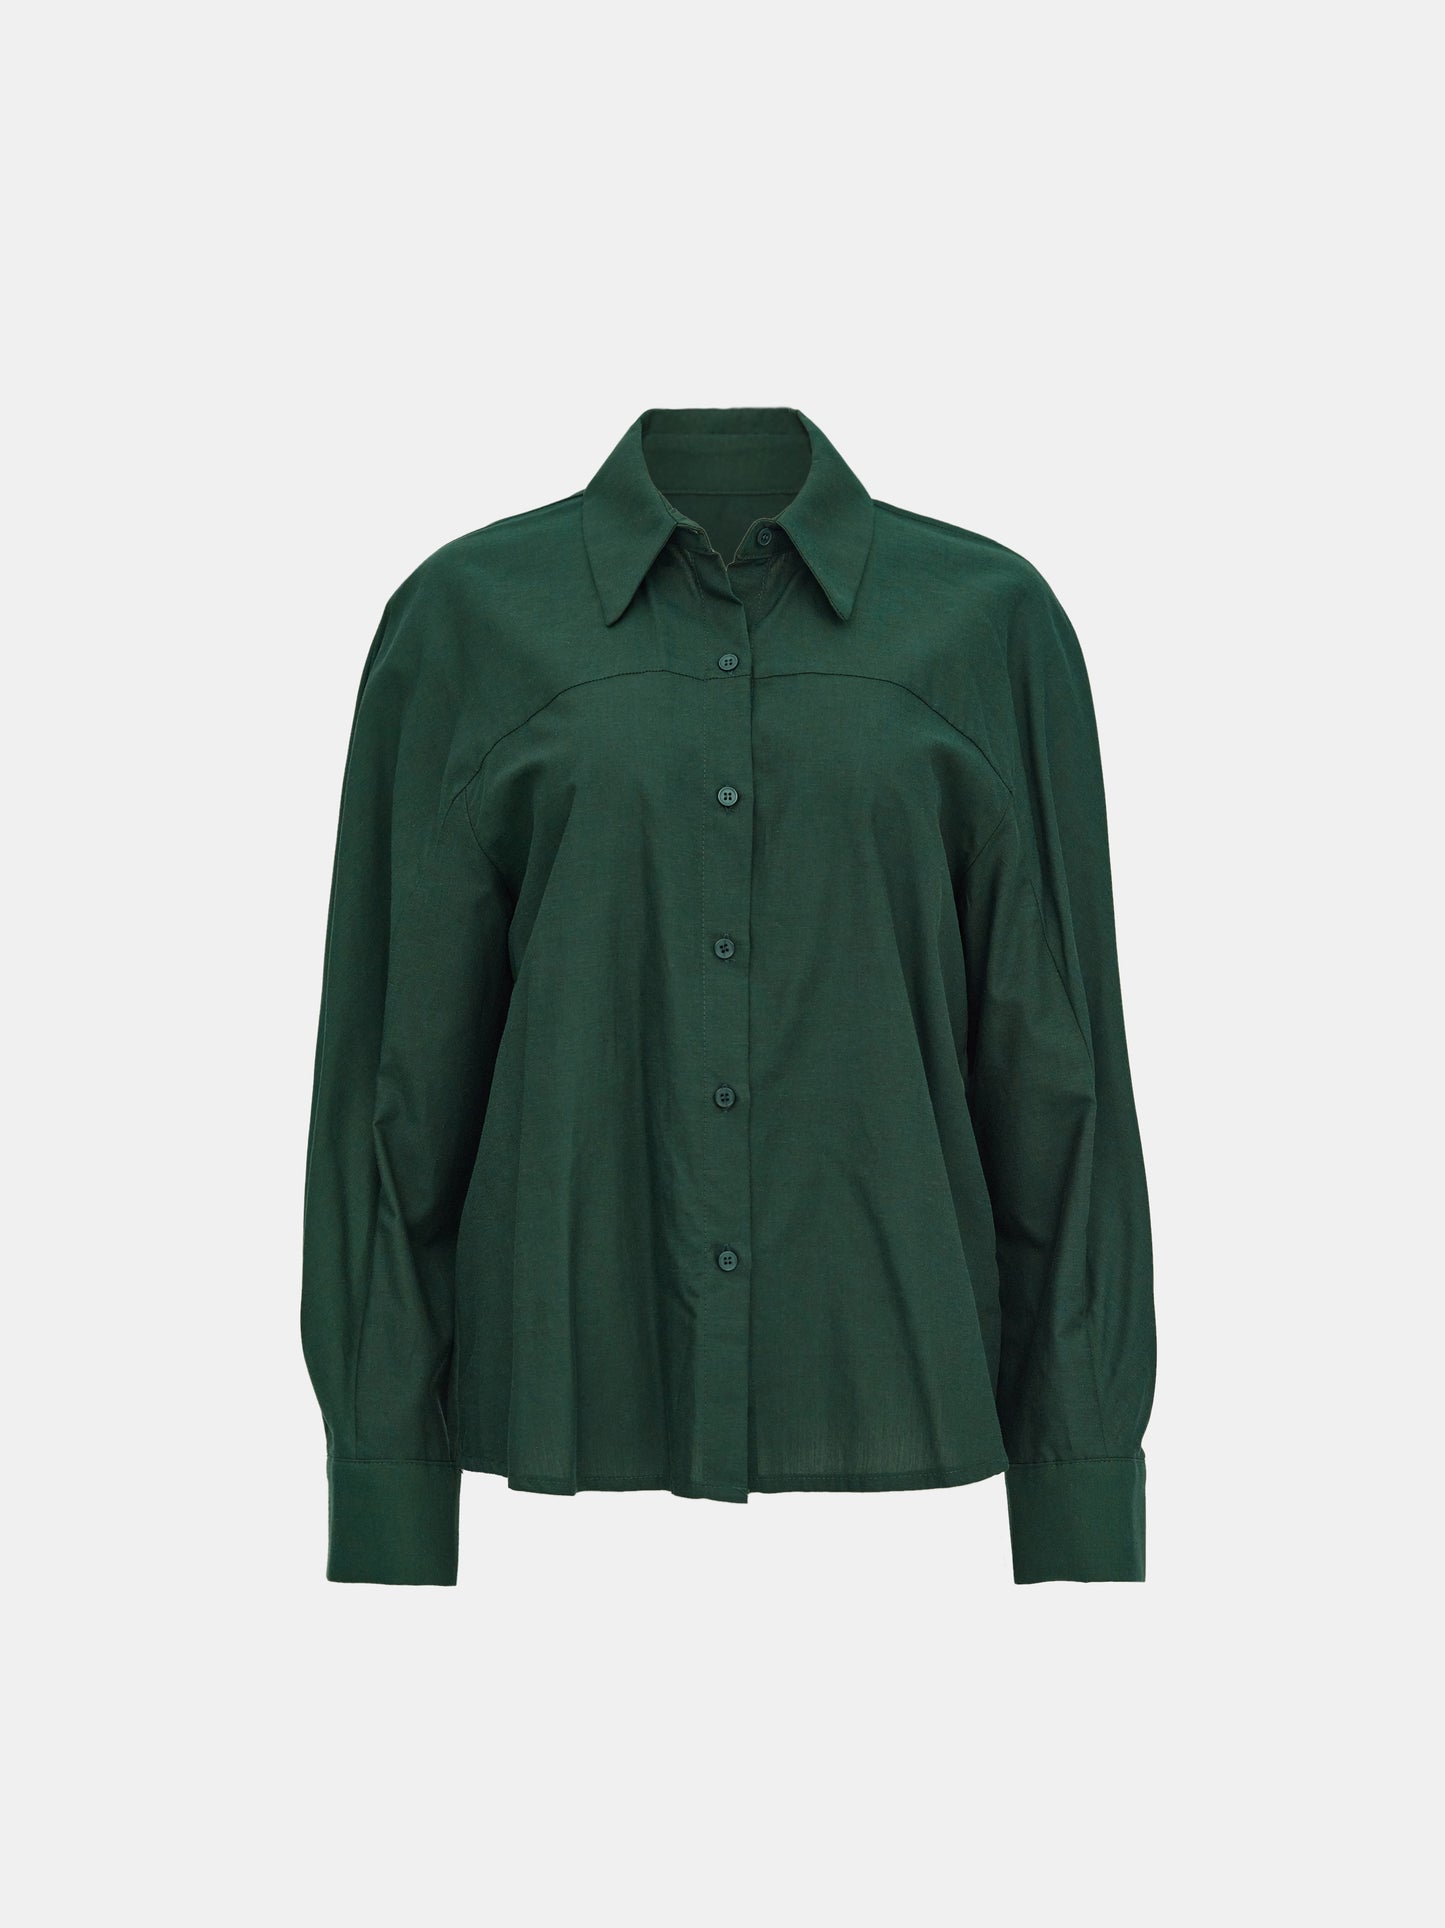 One-Shoulder Tank + Shirt Set, Mint & Peale Green